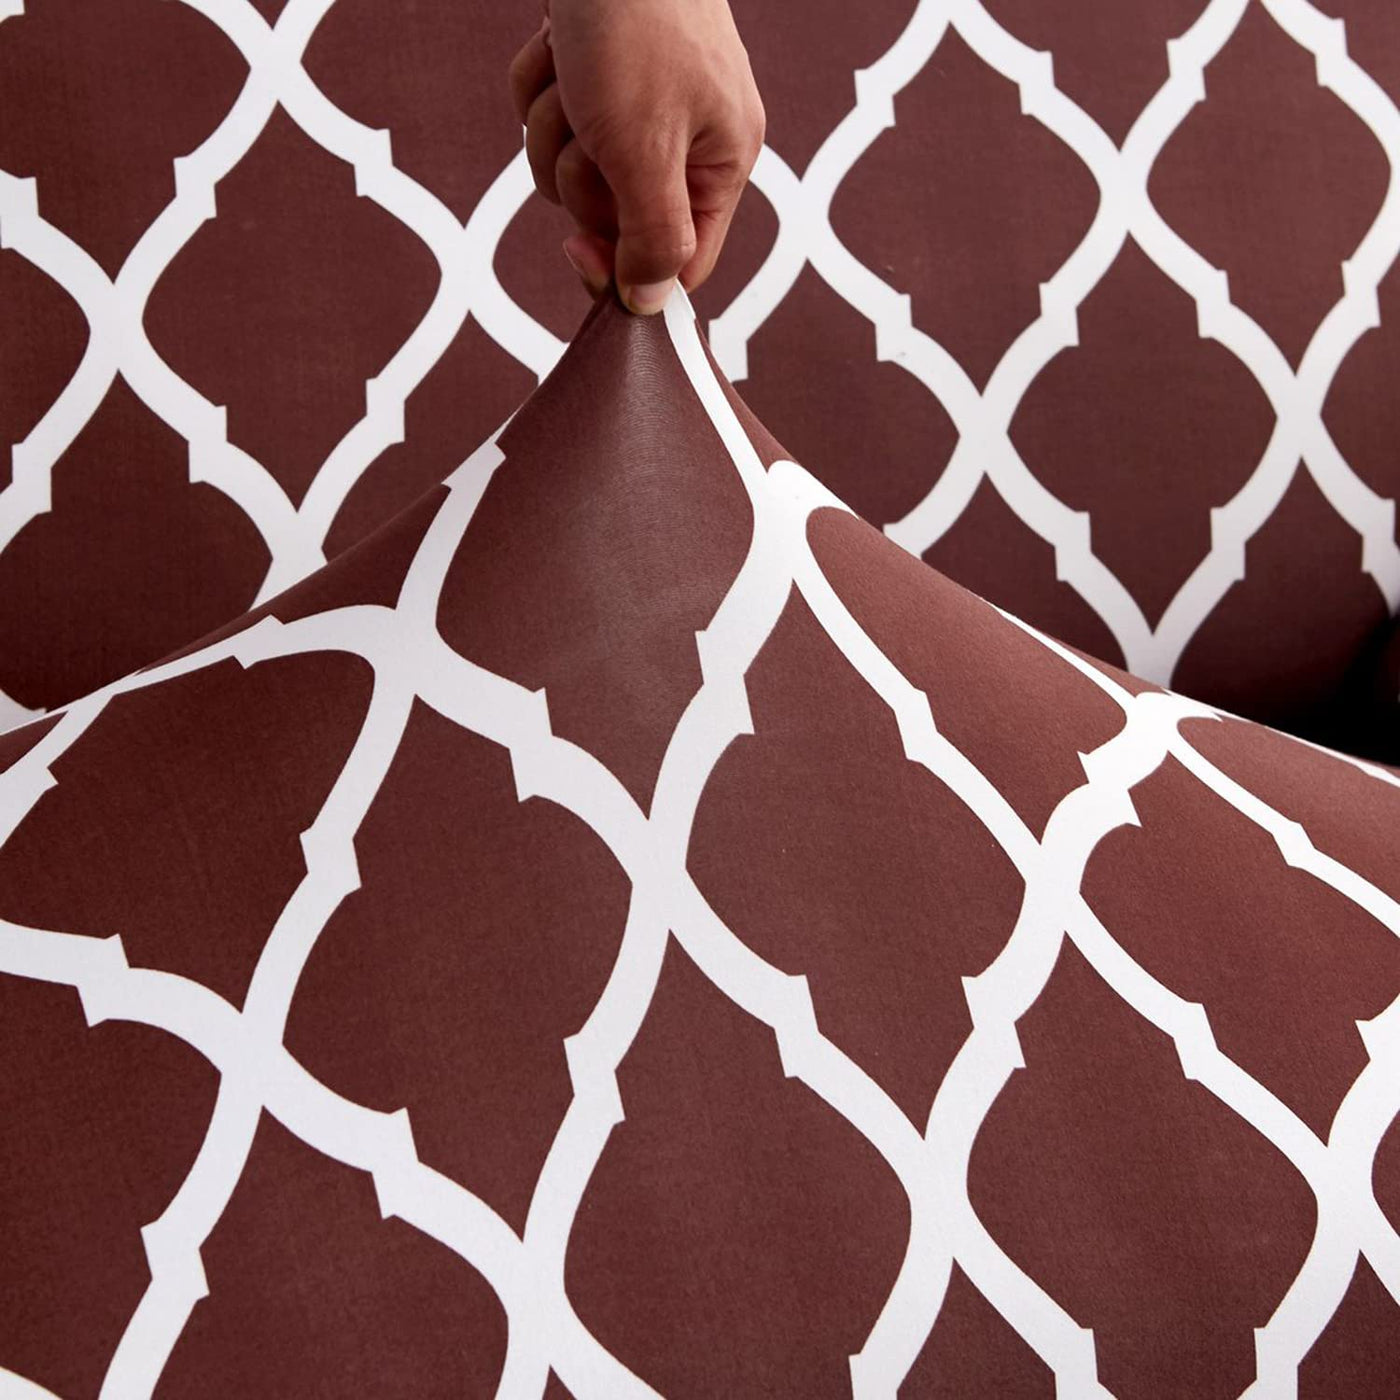 Universal Elastic Sofa Cover (Brown Diamond)